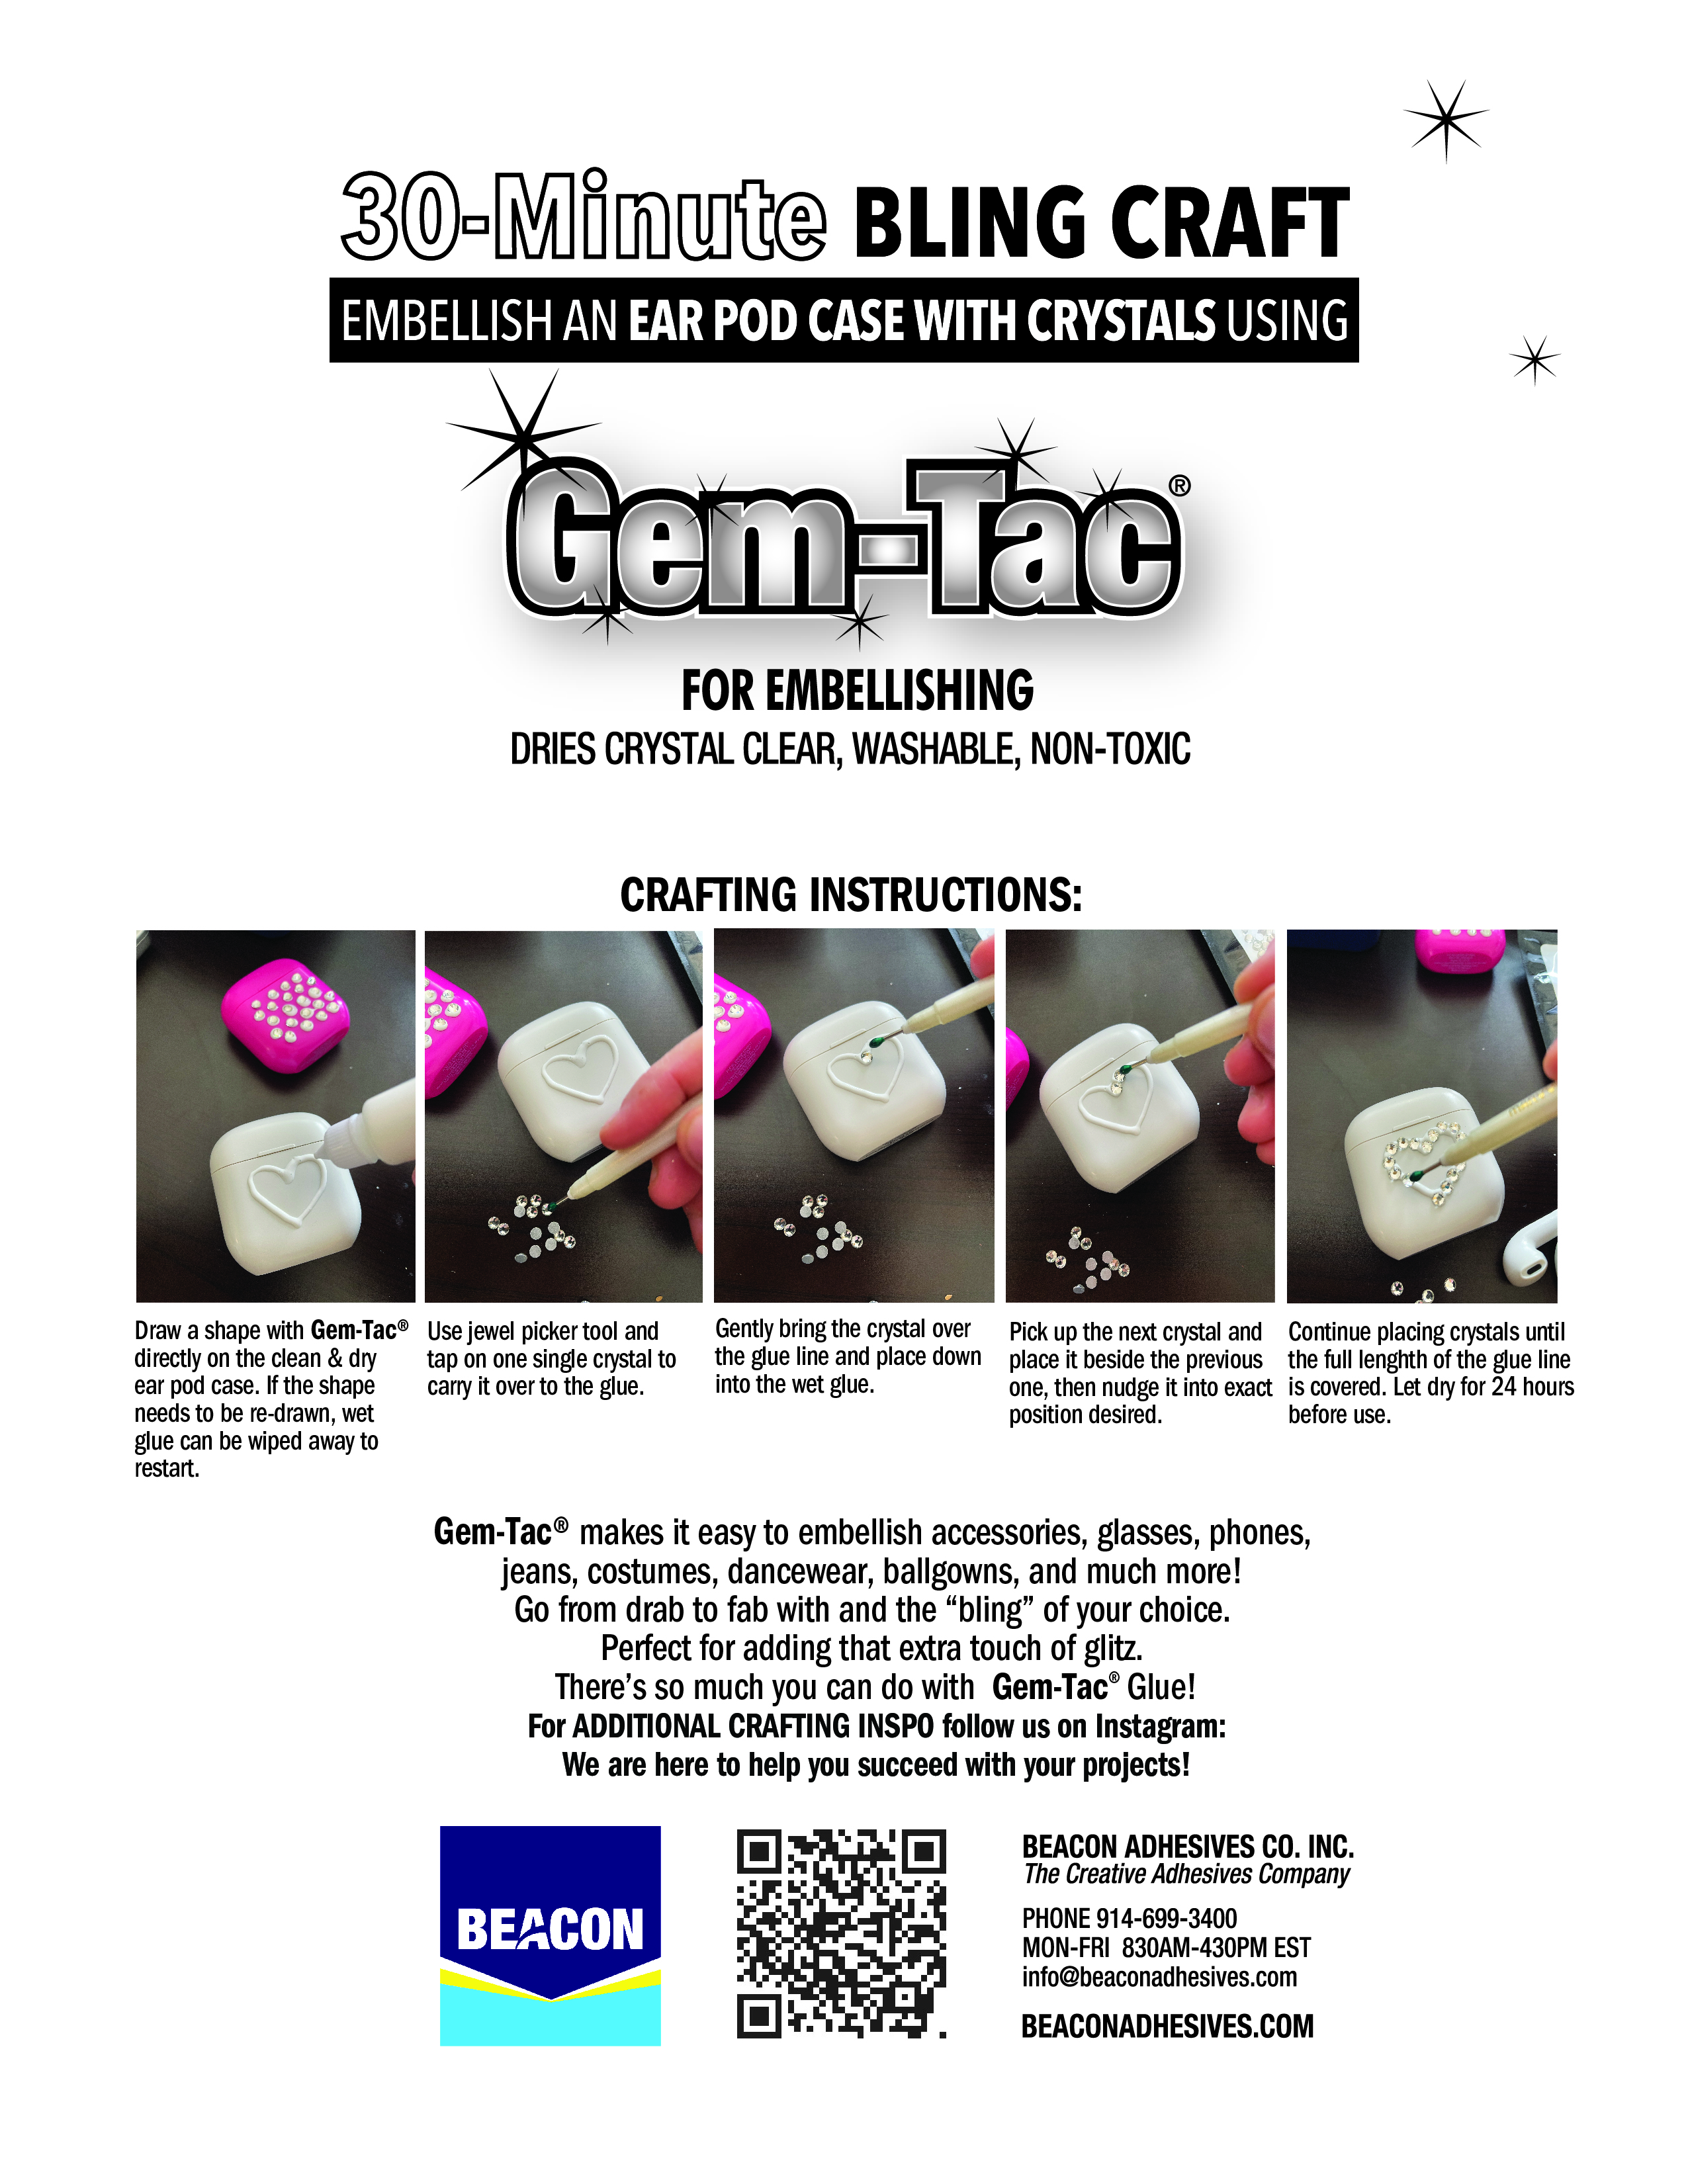 Beacon Gem-Tac™ Glue in Original Precision Tip Bottles